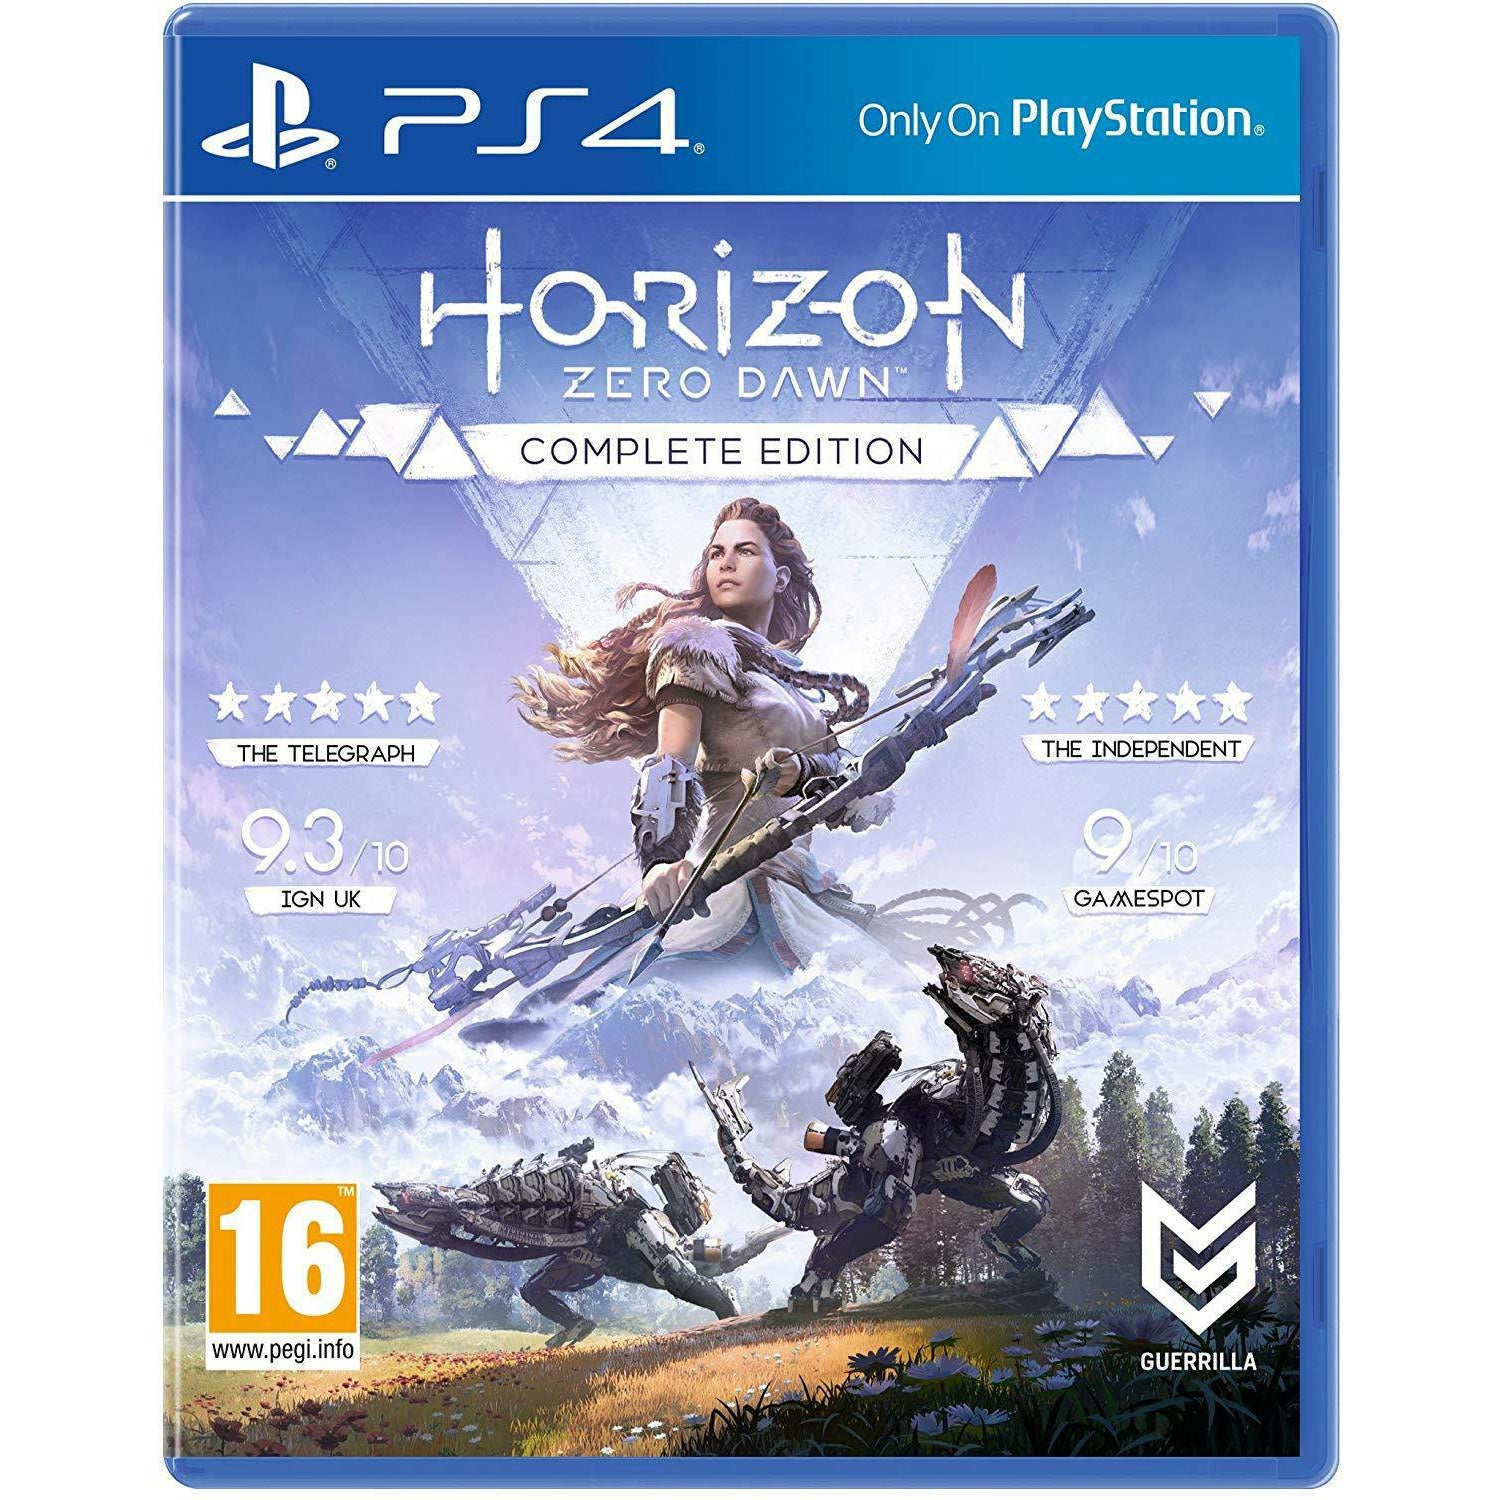 Horizon Zero Dawn (Complete Edition) para PS4 - Gshop Pty